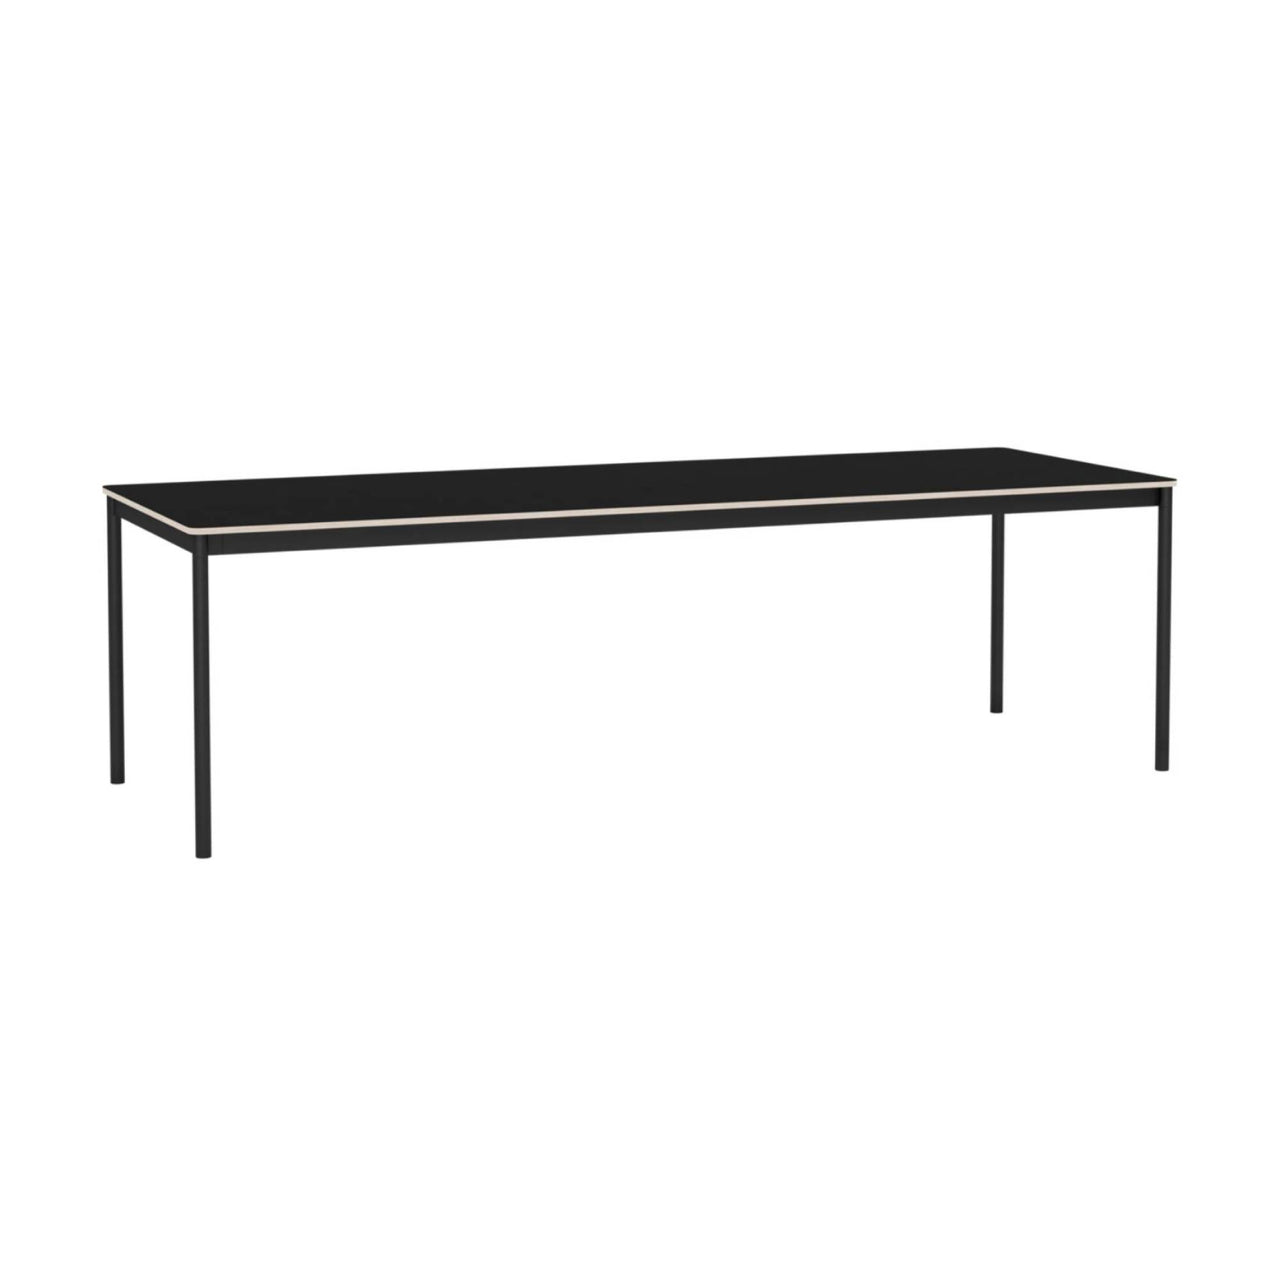 Base Table: Large + Black Laminate + Plywood Edge + Black